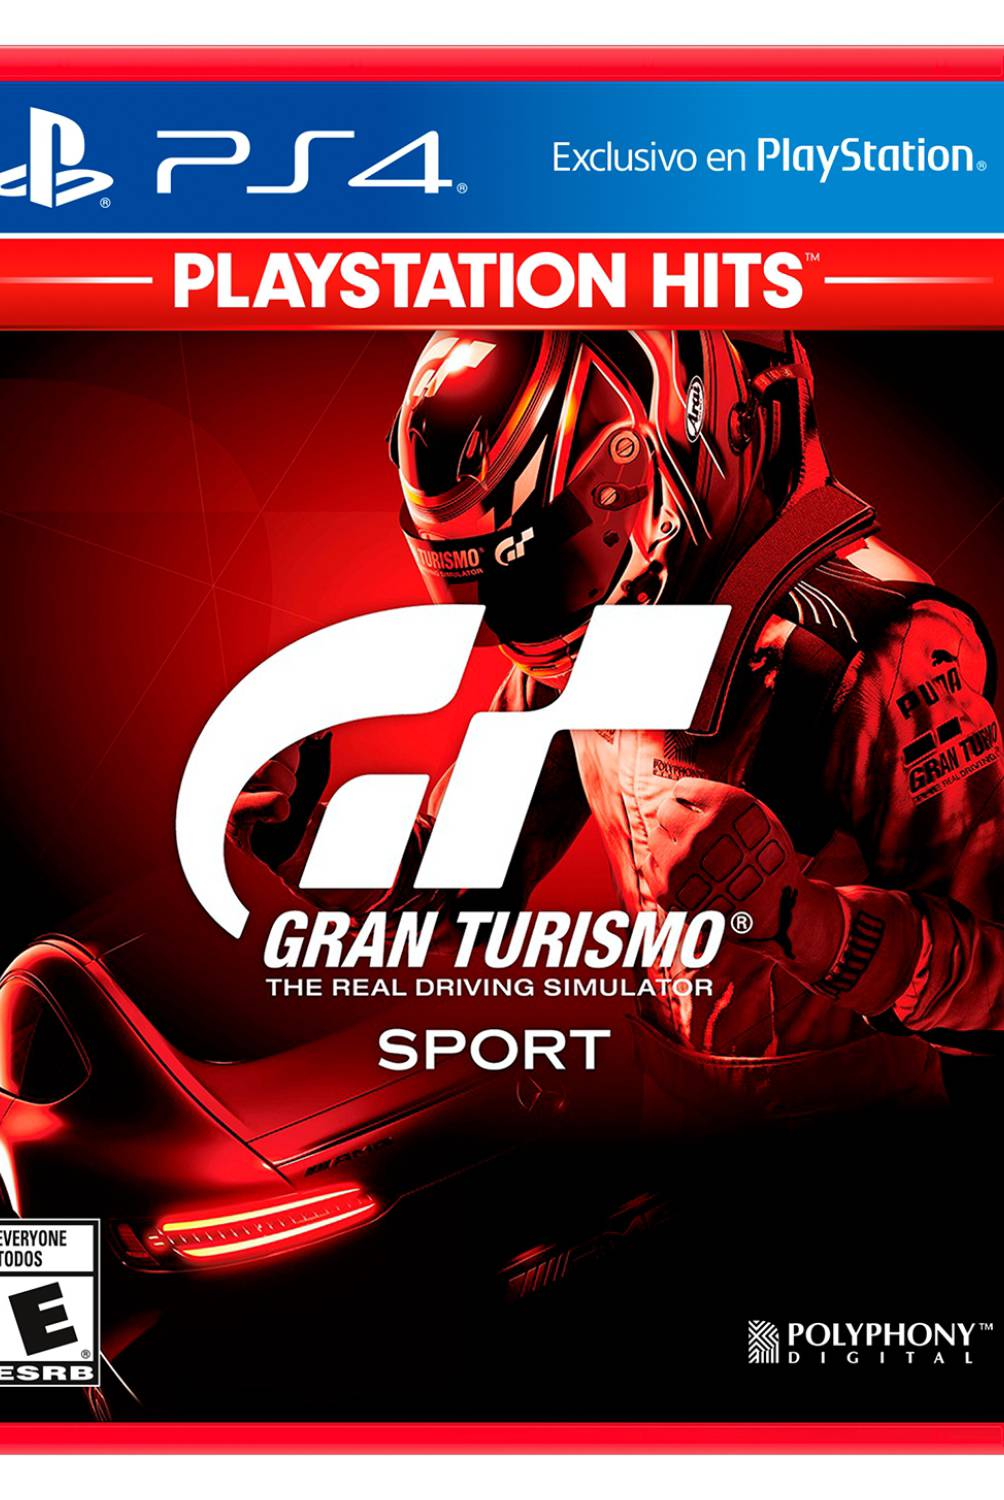 PLAYSTATION - Playstation Gran Turismo Sport Ps4 Playstation